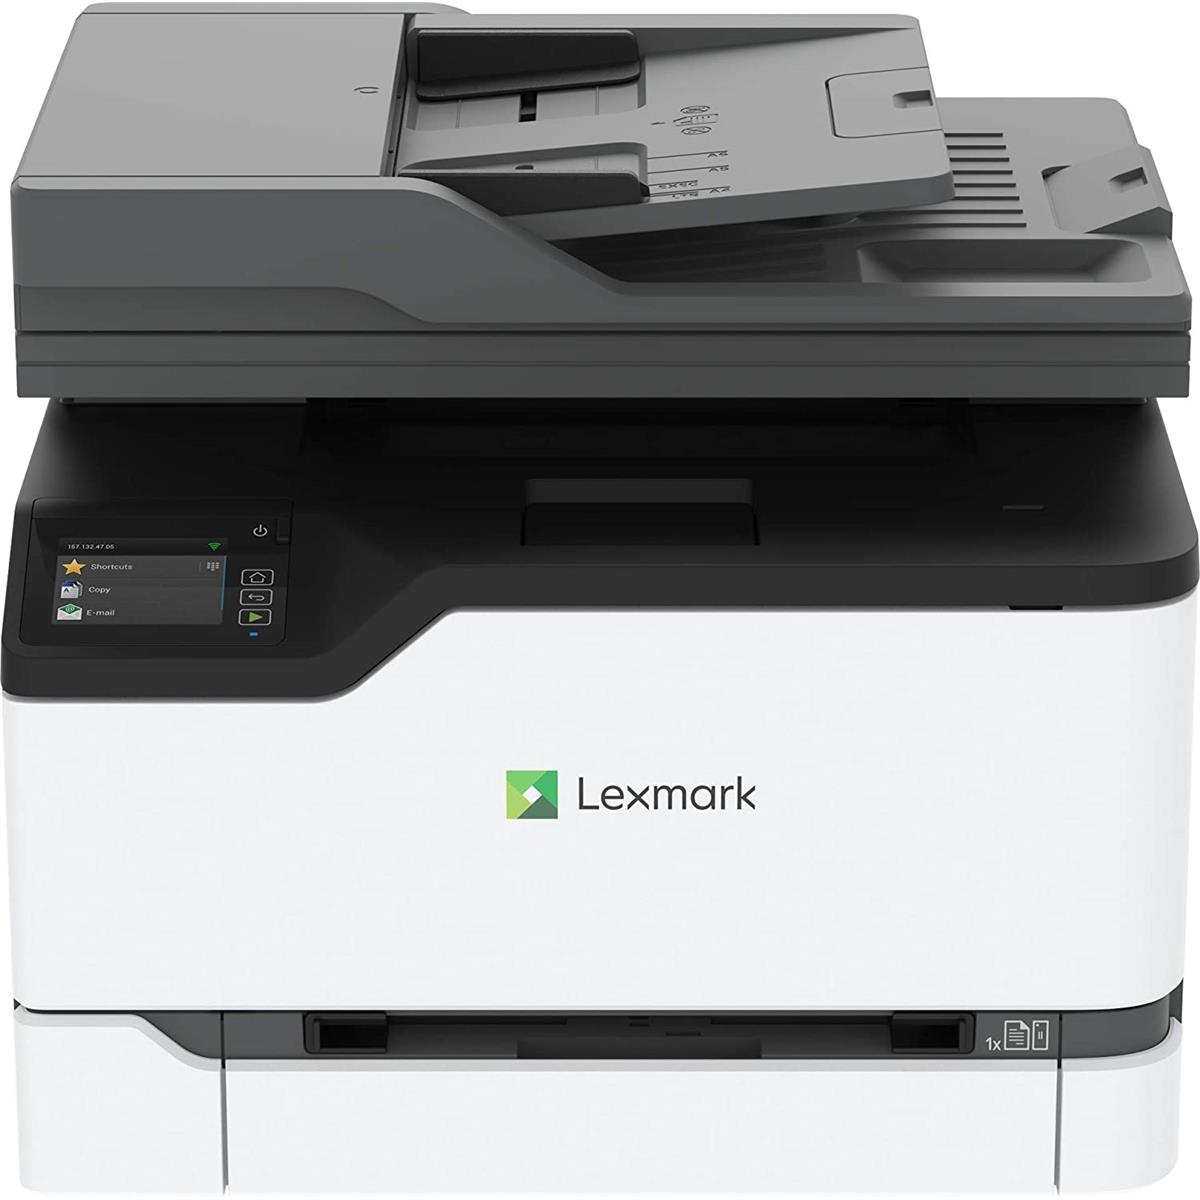 

Lexmark MC3426 Wireless Multifunction Color Duplex Laser Printer, 26 ppm